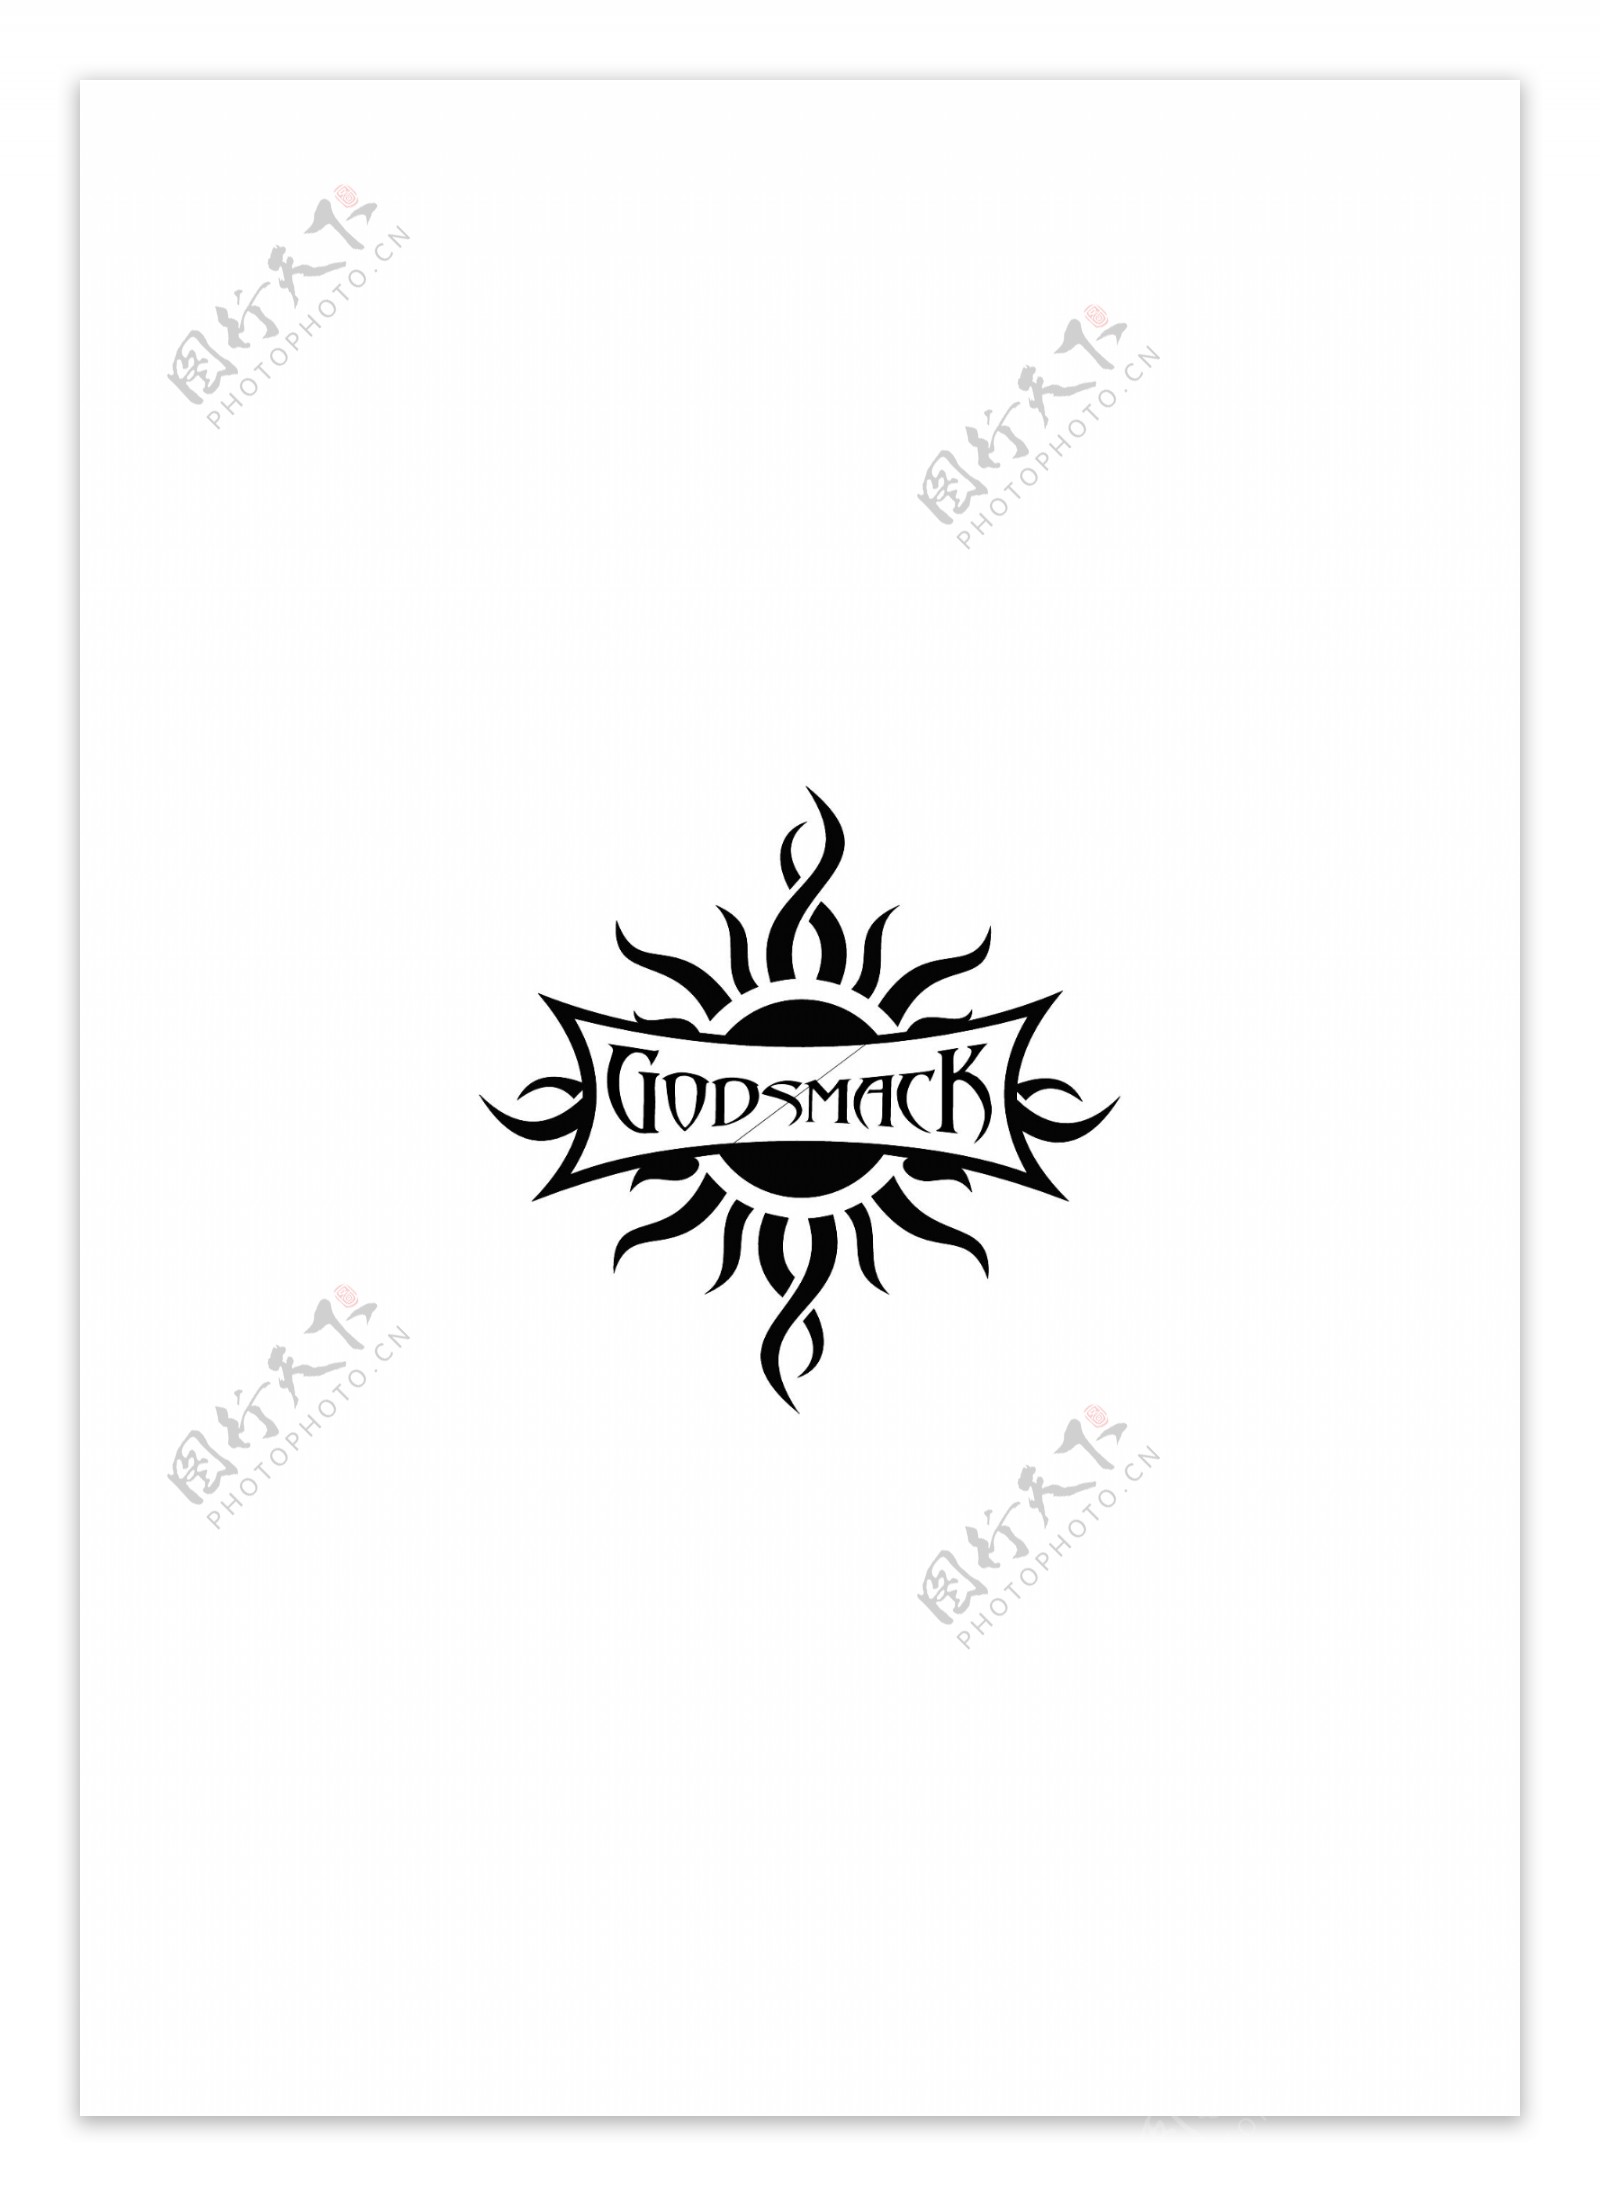 GodsmackSunlogo设计欣赏GodsmackSun音乐公司标志下载标志设计欣赏